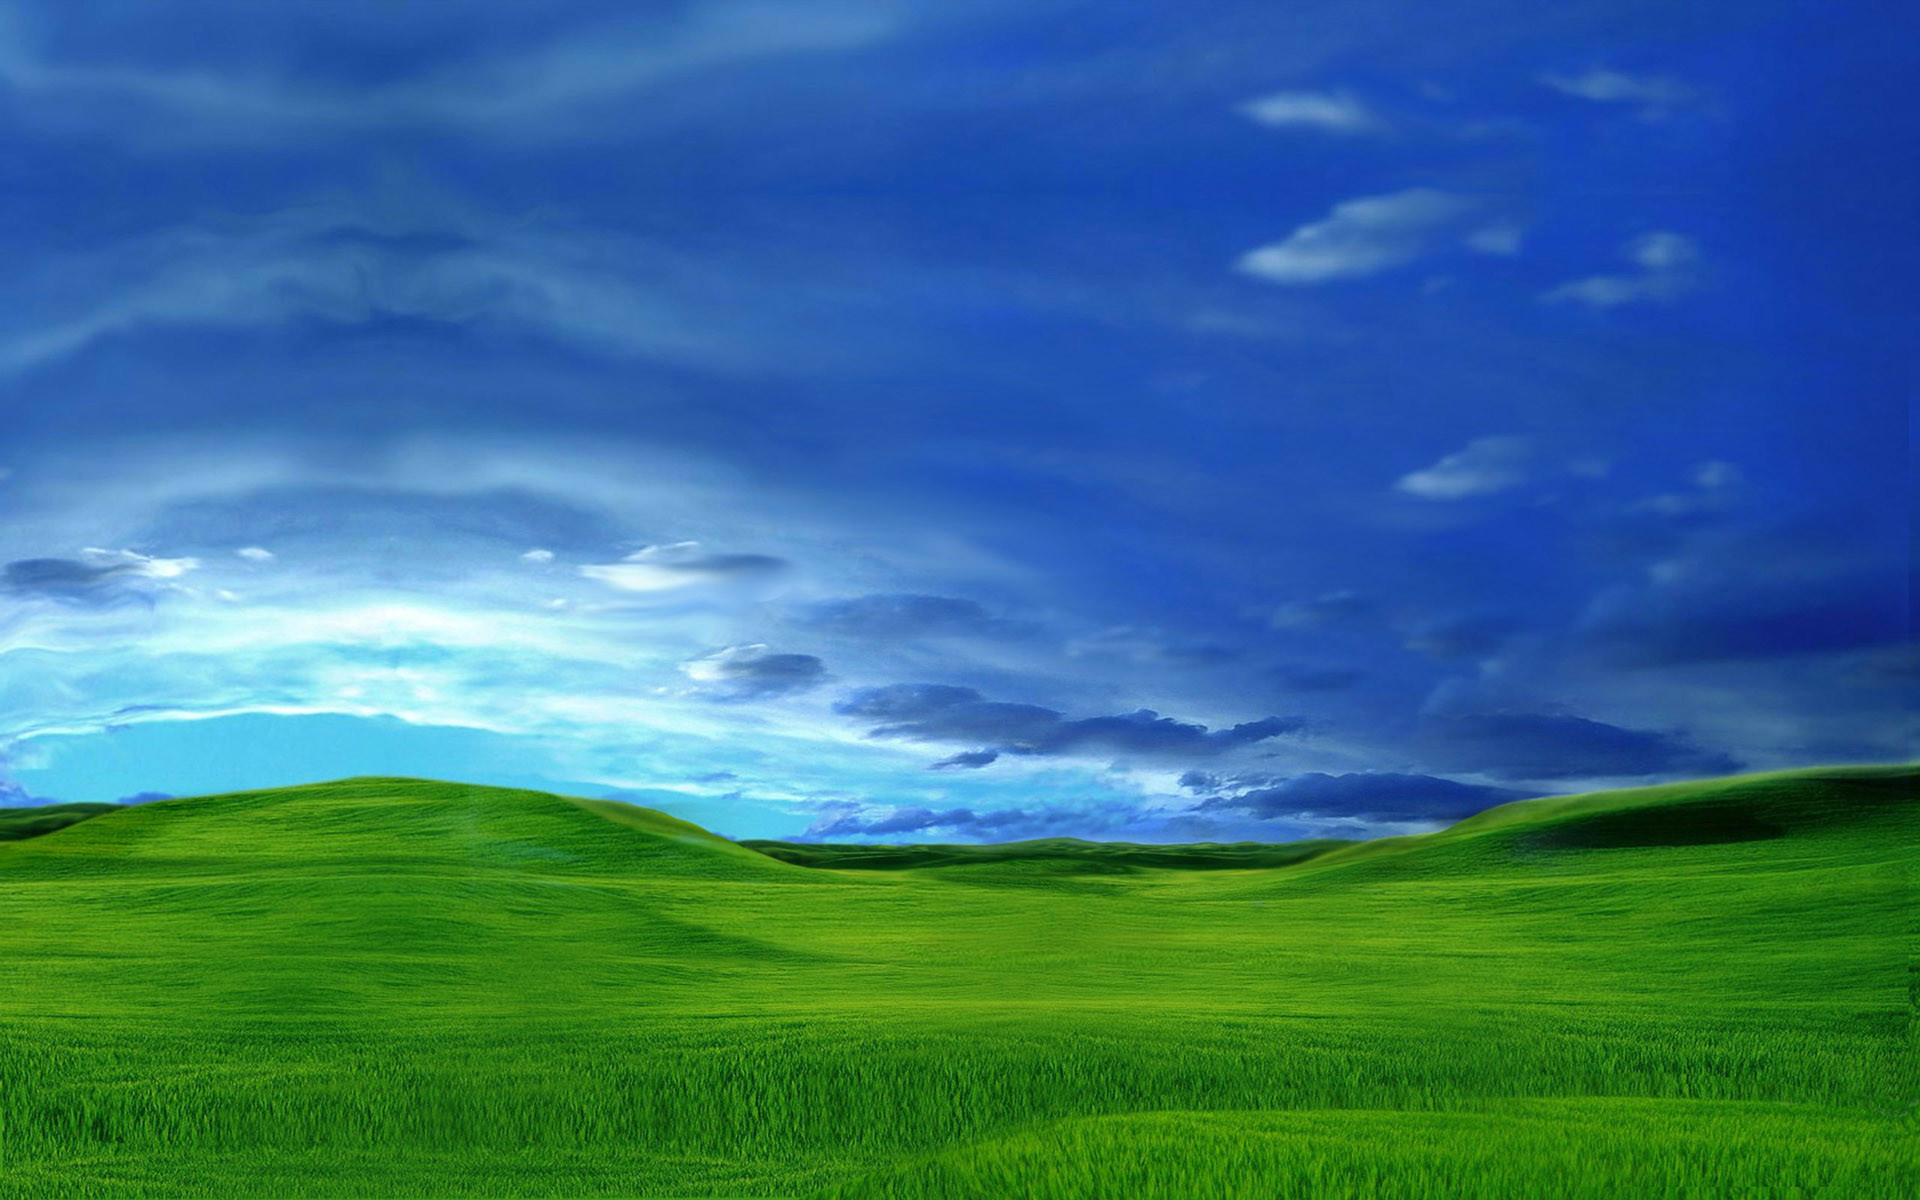 1920x1200 In Windows XP style / 1920 x 1200 / Landscape / Photography | MIRIADNA .